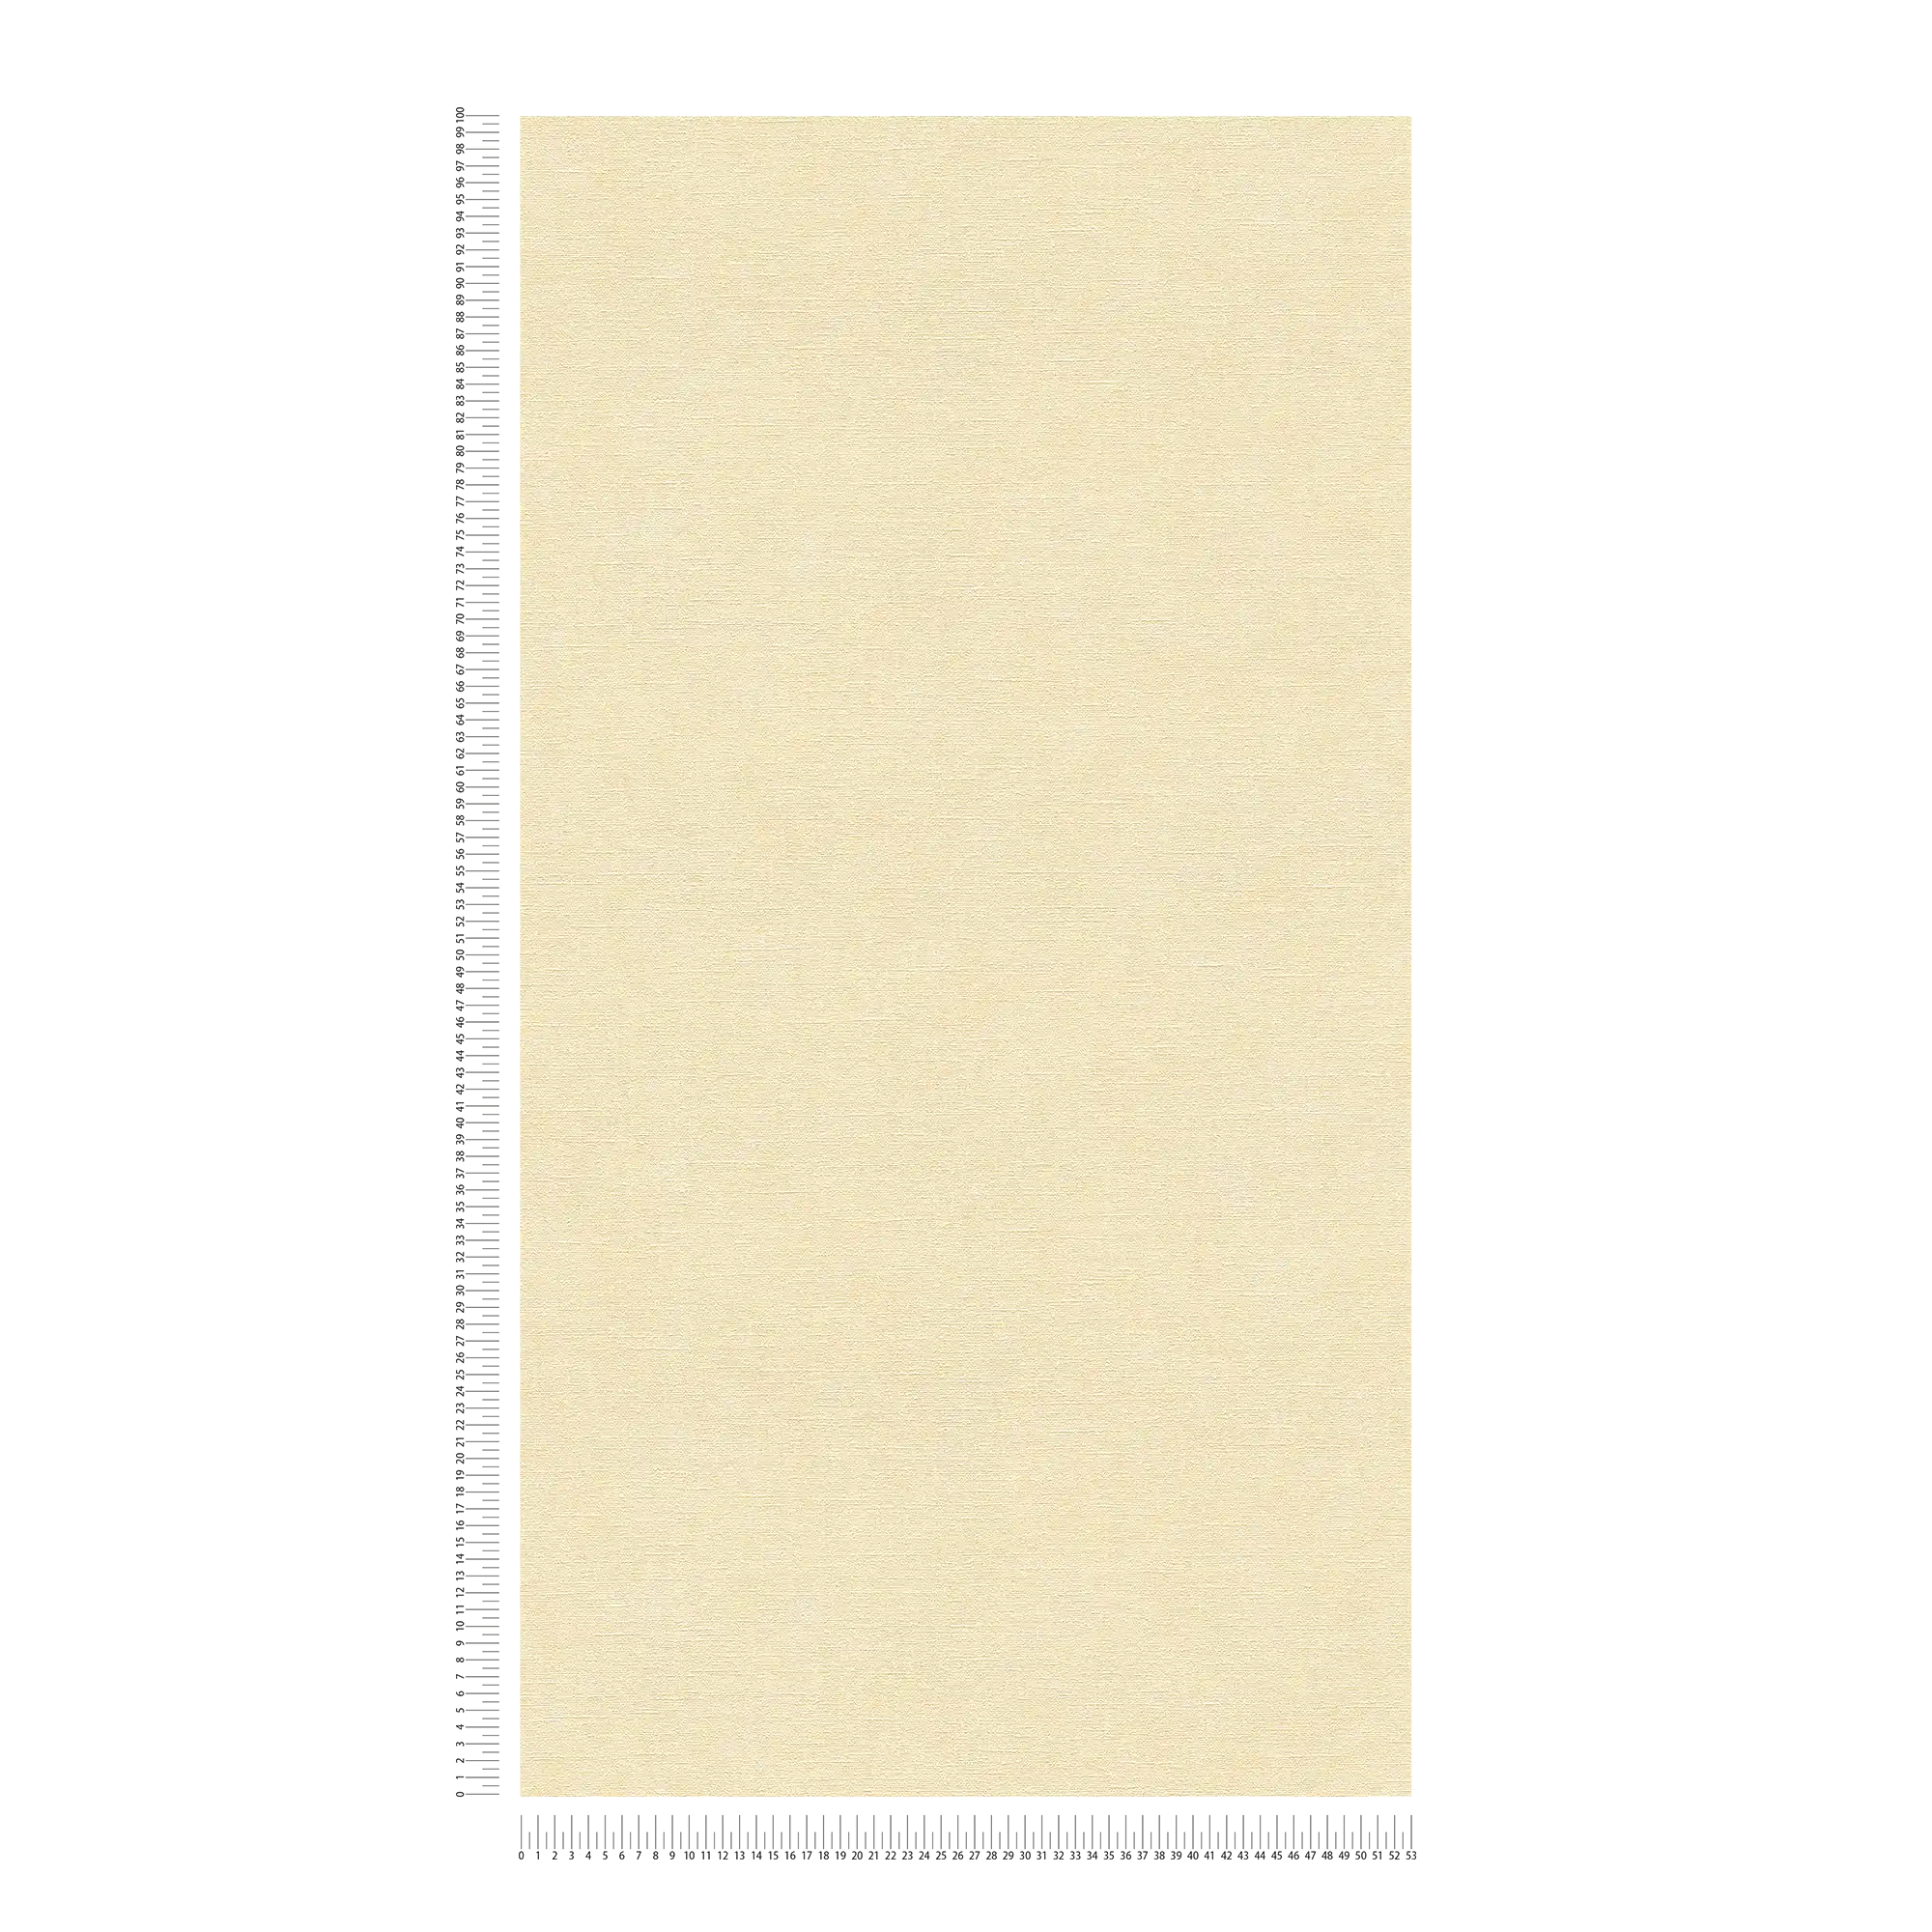             Non-woven wallpaper, single-coloured, textile look - beige
        